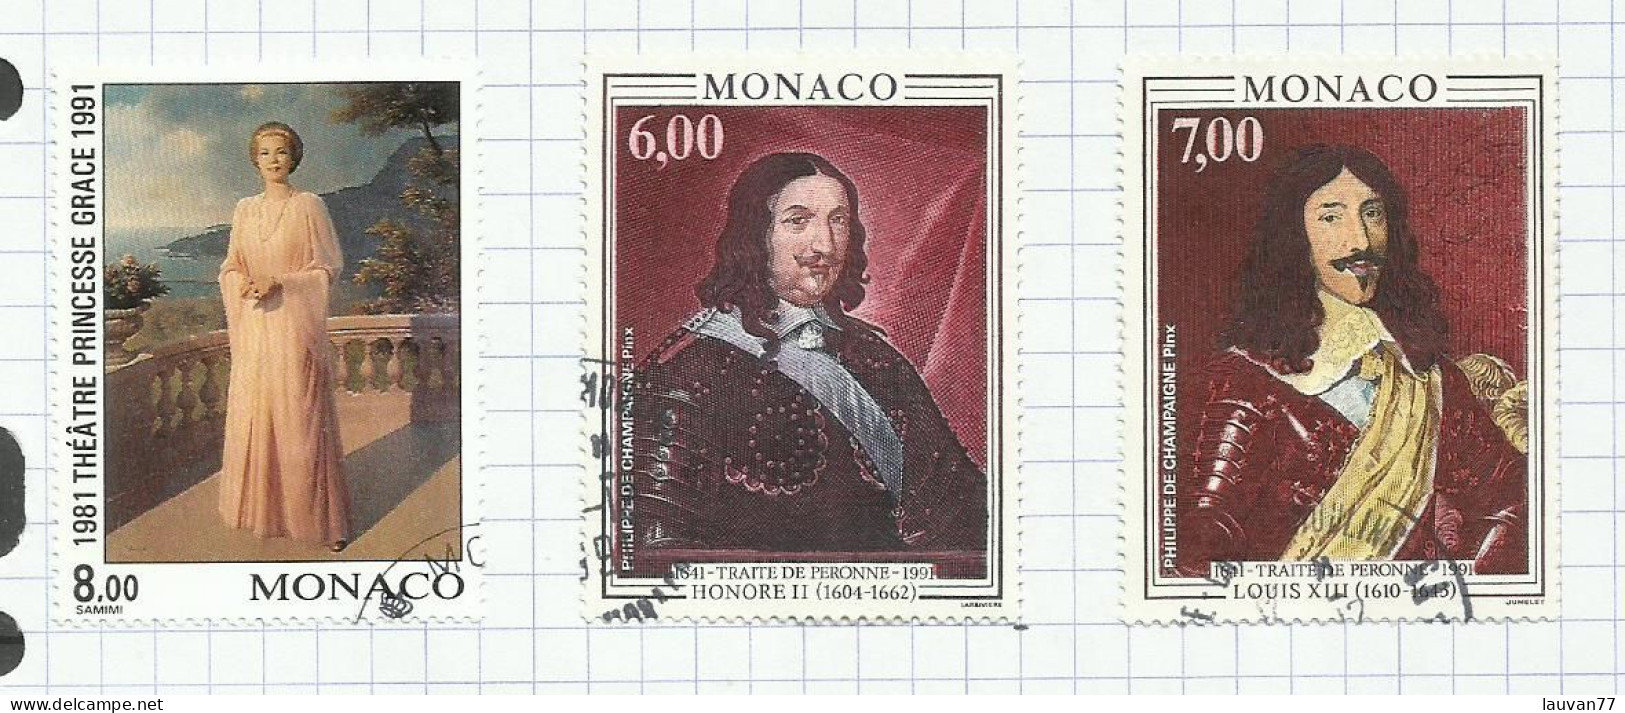 Monaco N°1786 à 1788 Cote 10.85€ - Used Stamps